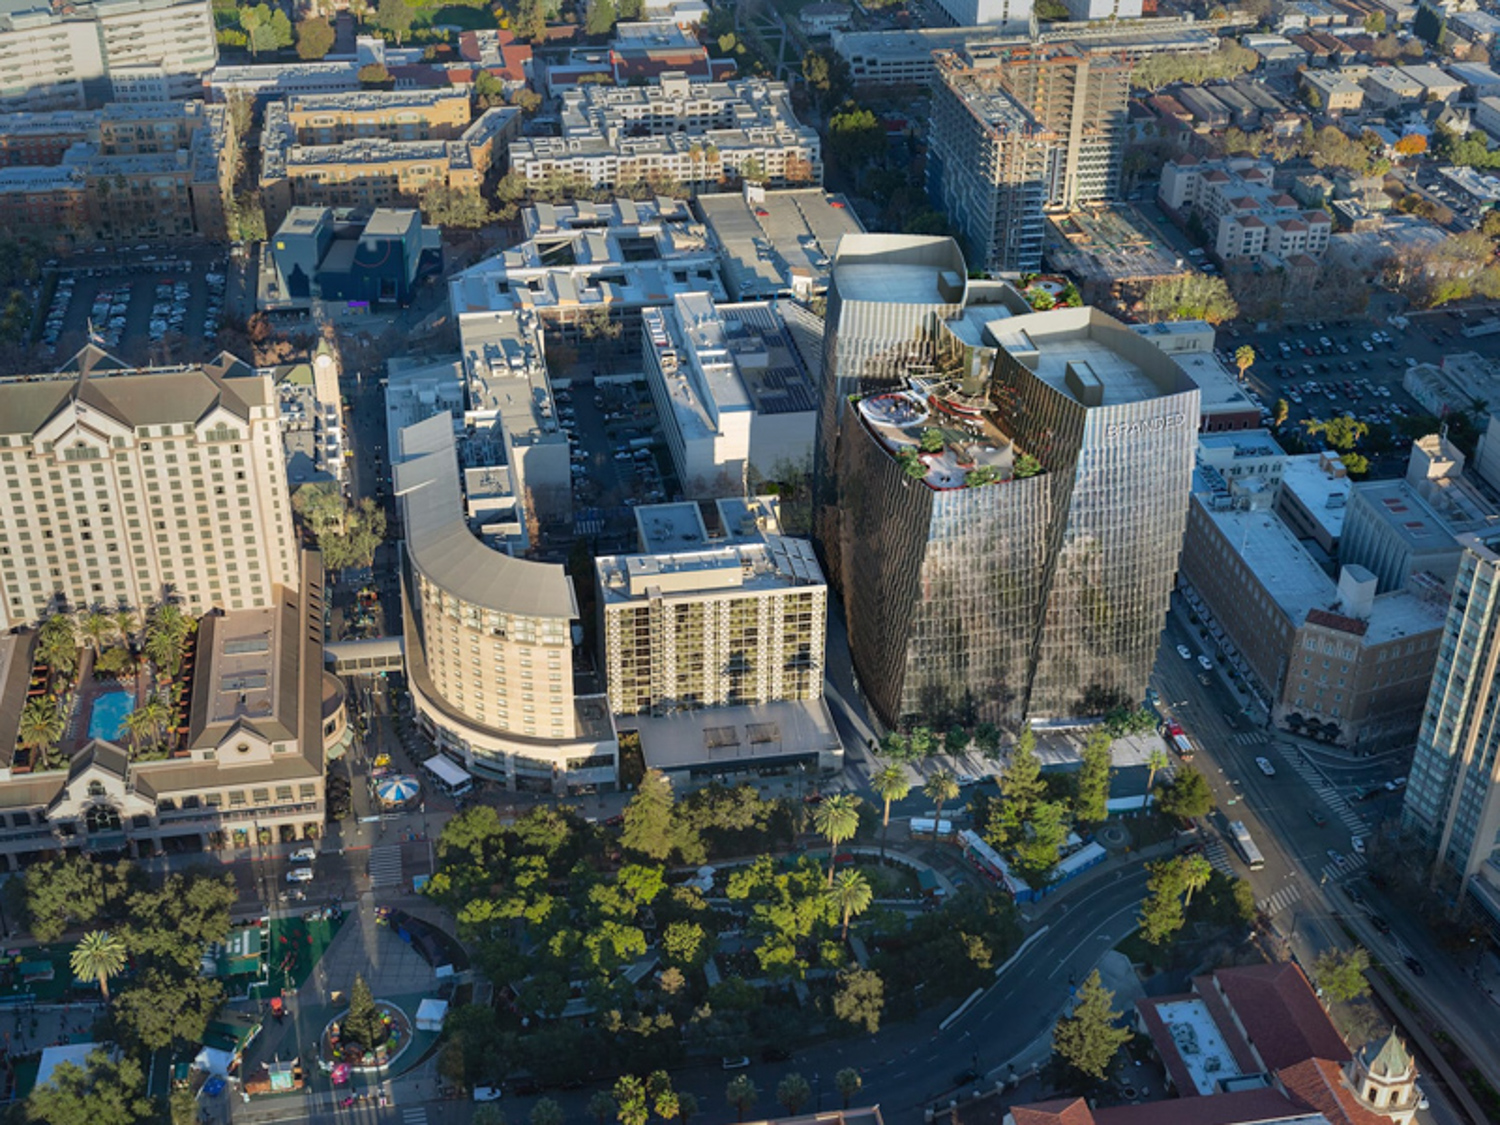 282 South Market Street aerial view, via Ndexi